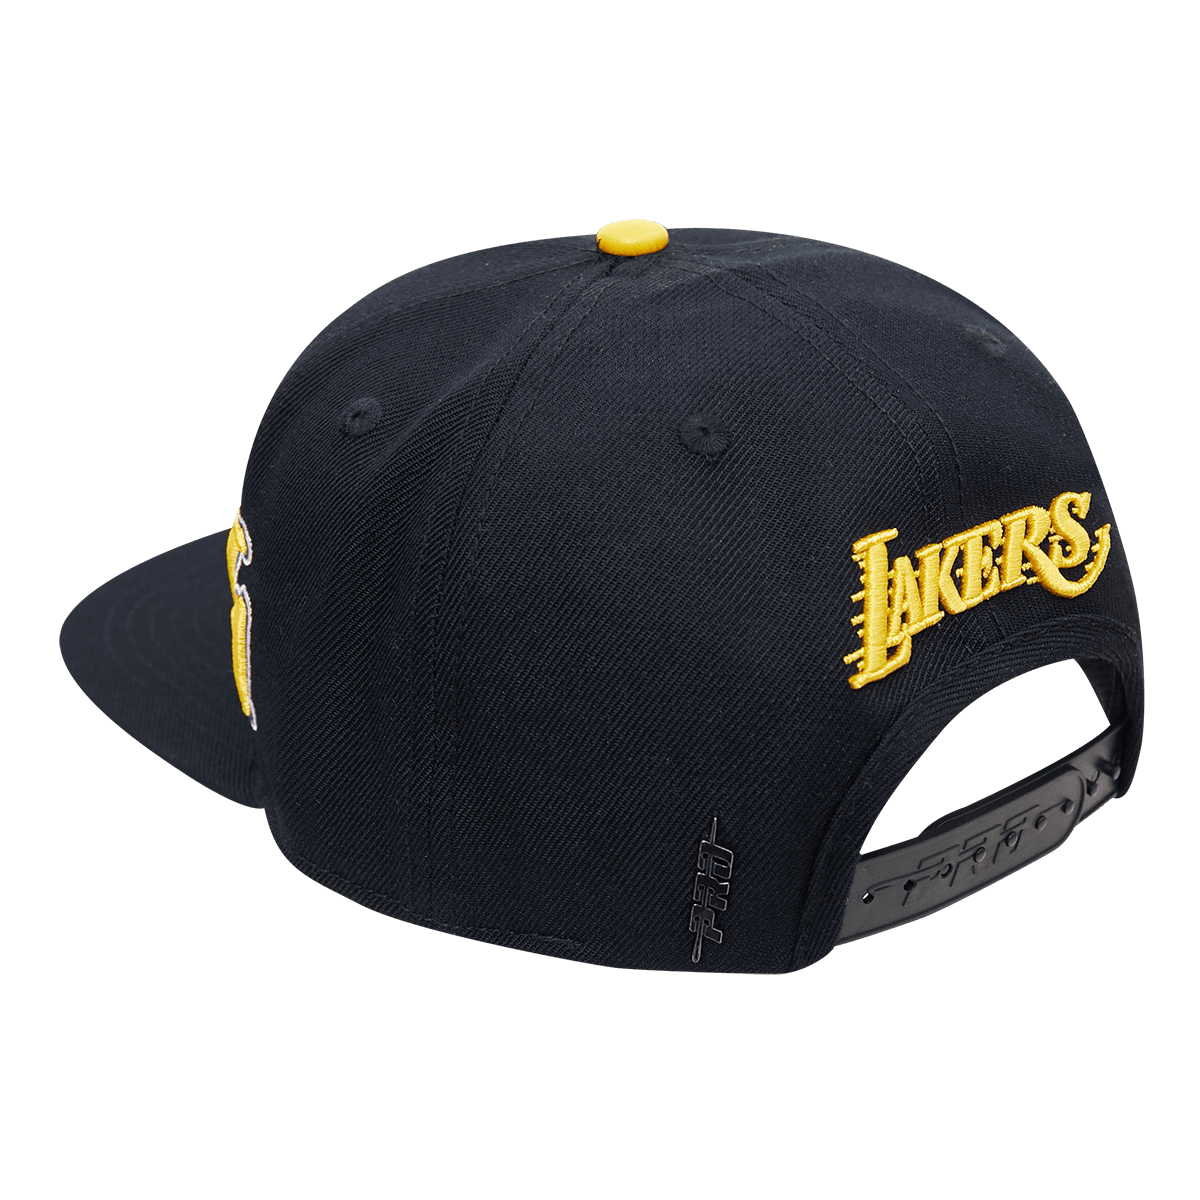 Men's Pro Standard Black Los Angeles Lakers Roses Snapback Hat